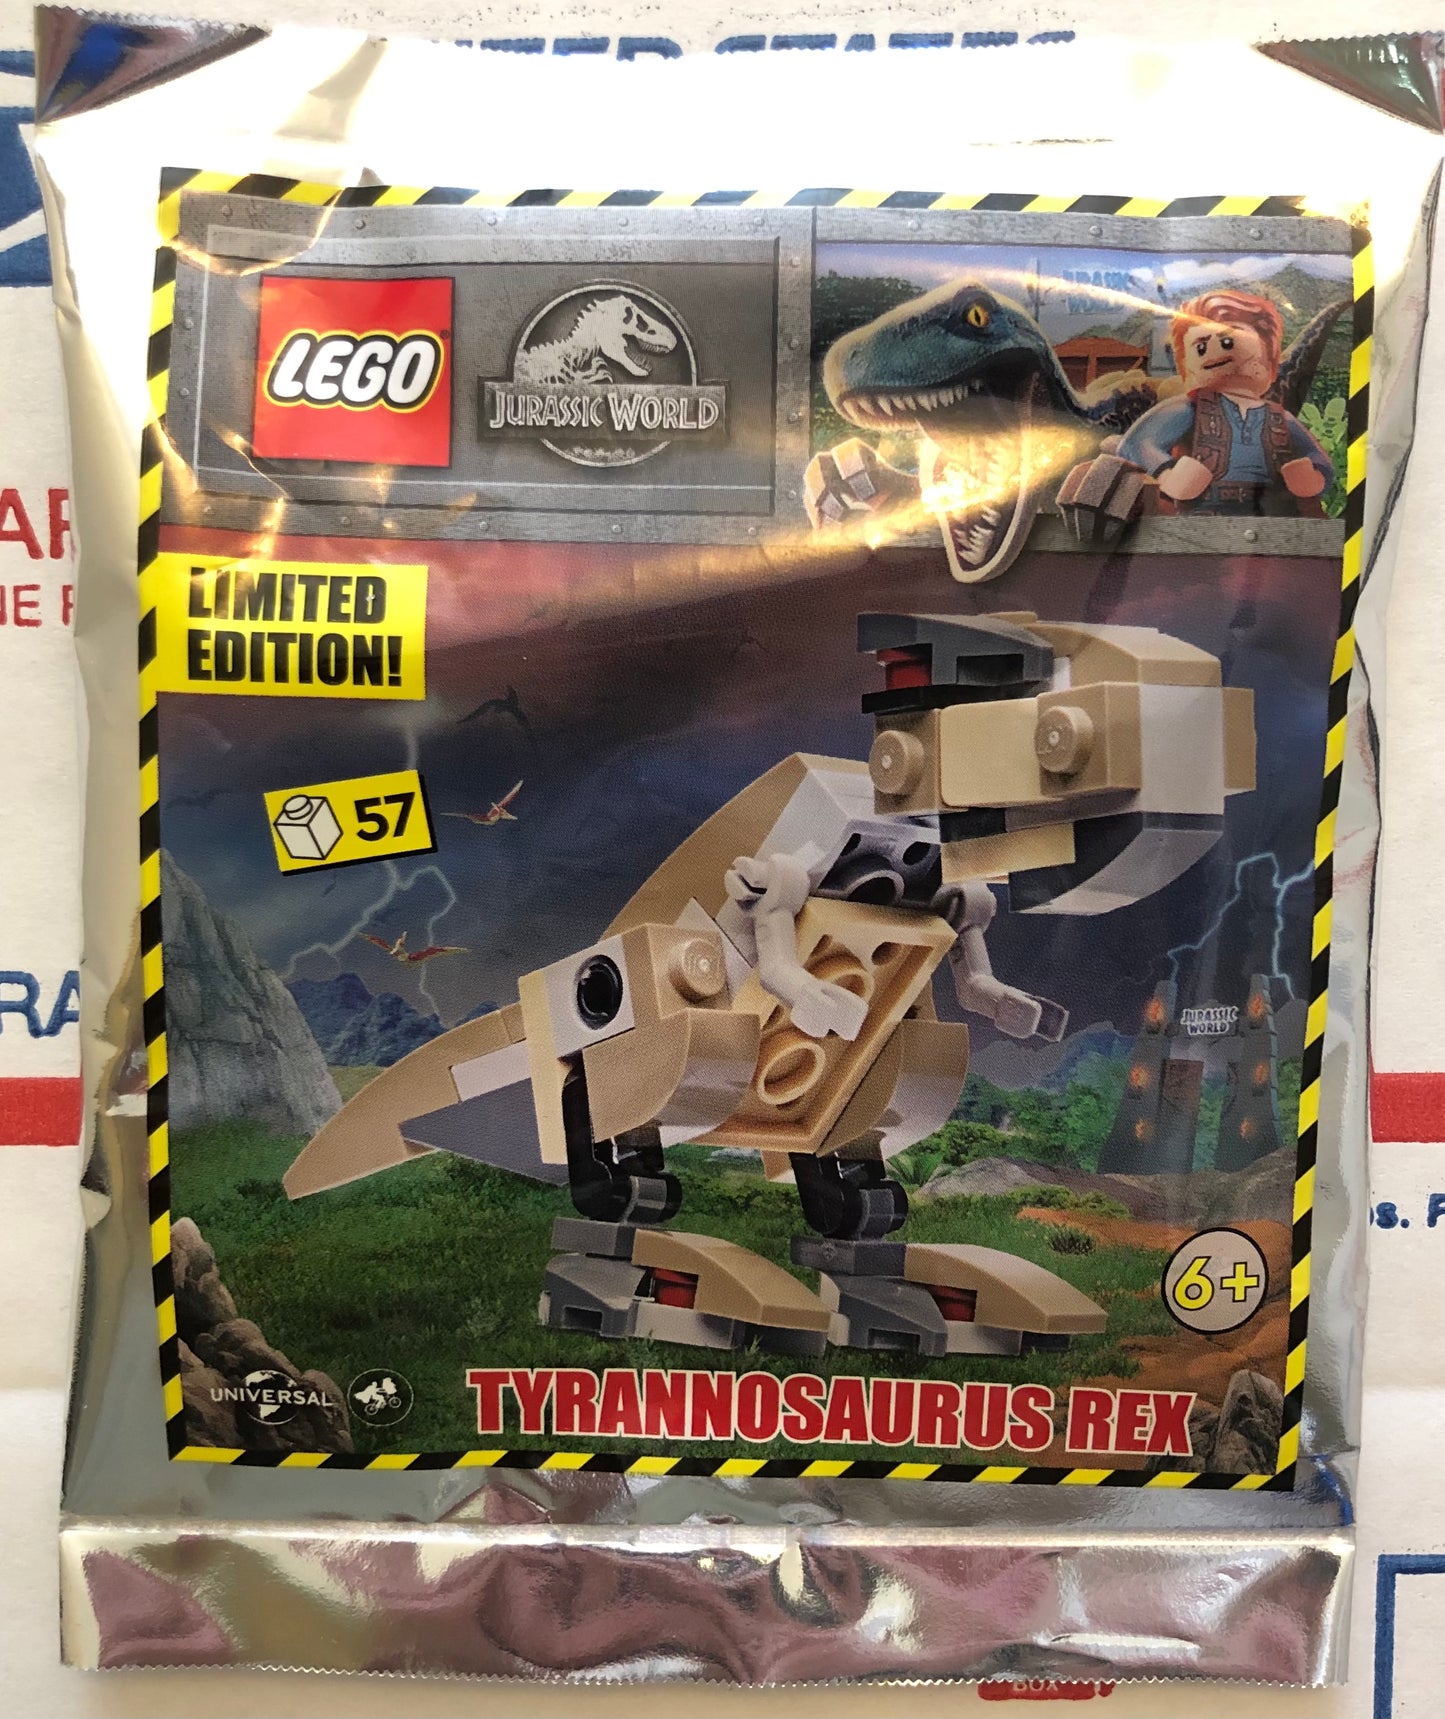 LEGO Jurassic World Tyrannosaurus Rex Limited Edition Foil Pack Bag Build Set 122218